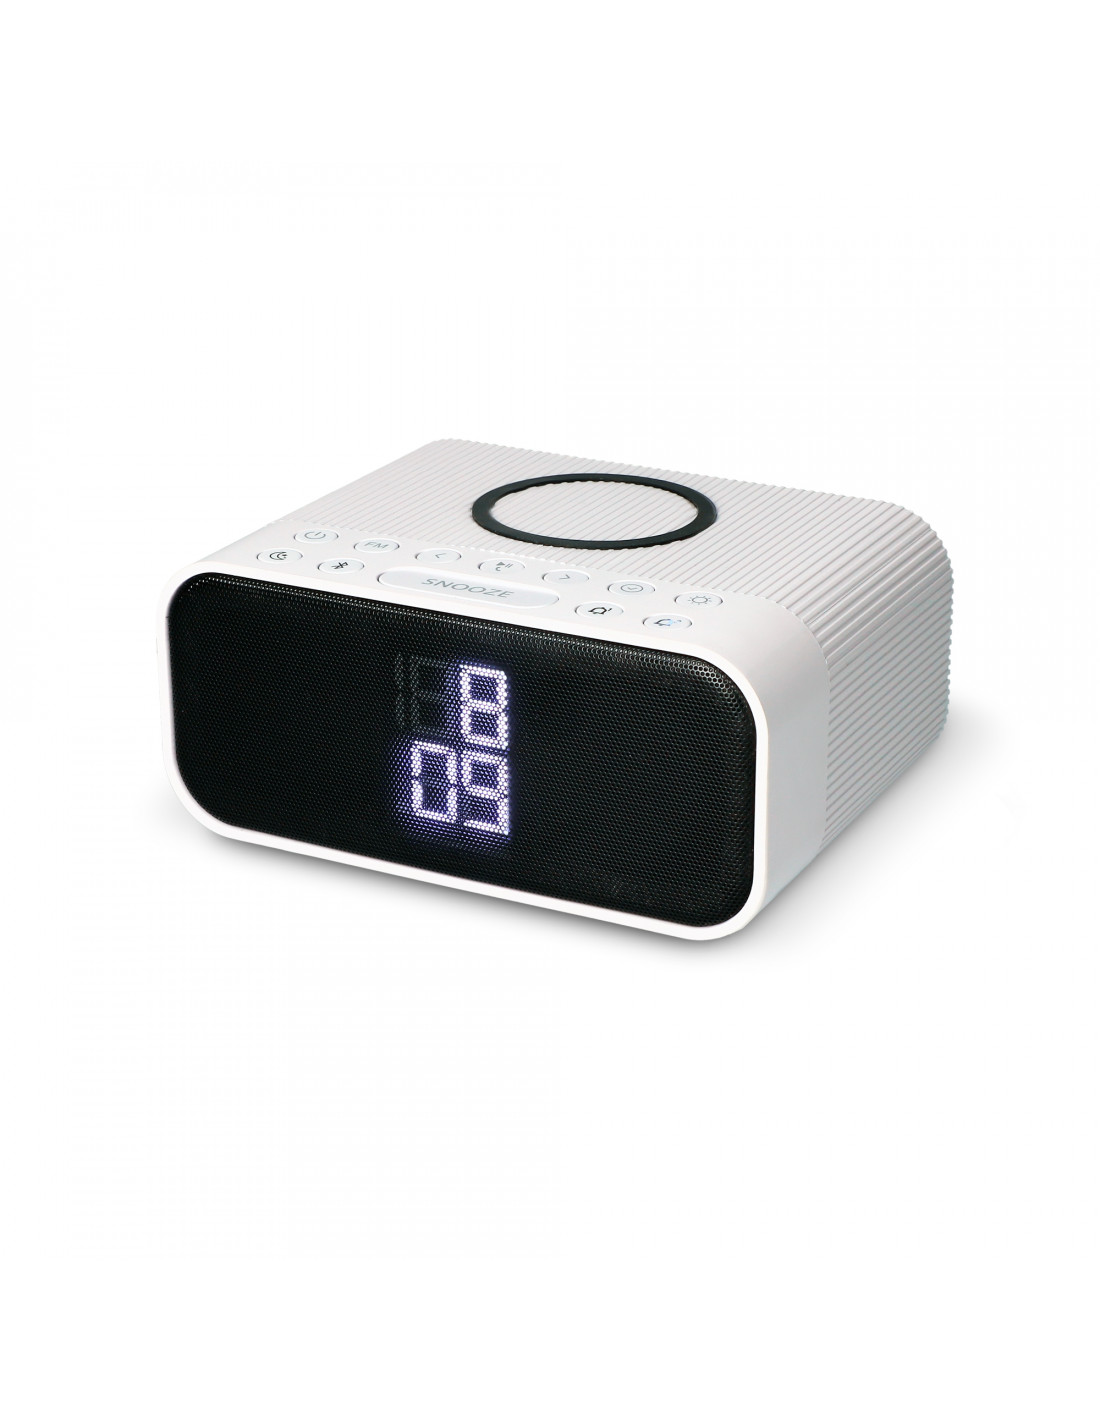 Lampara Smart Parlante Bluetooth Cargador Inalambrico Despertador